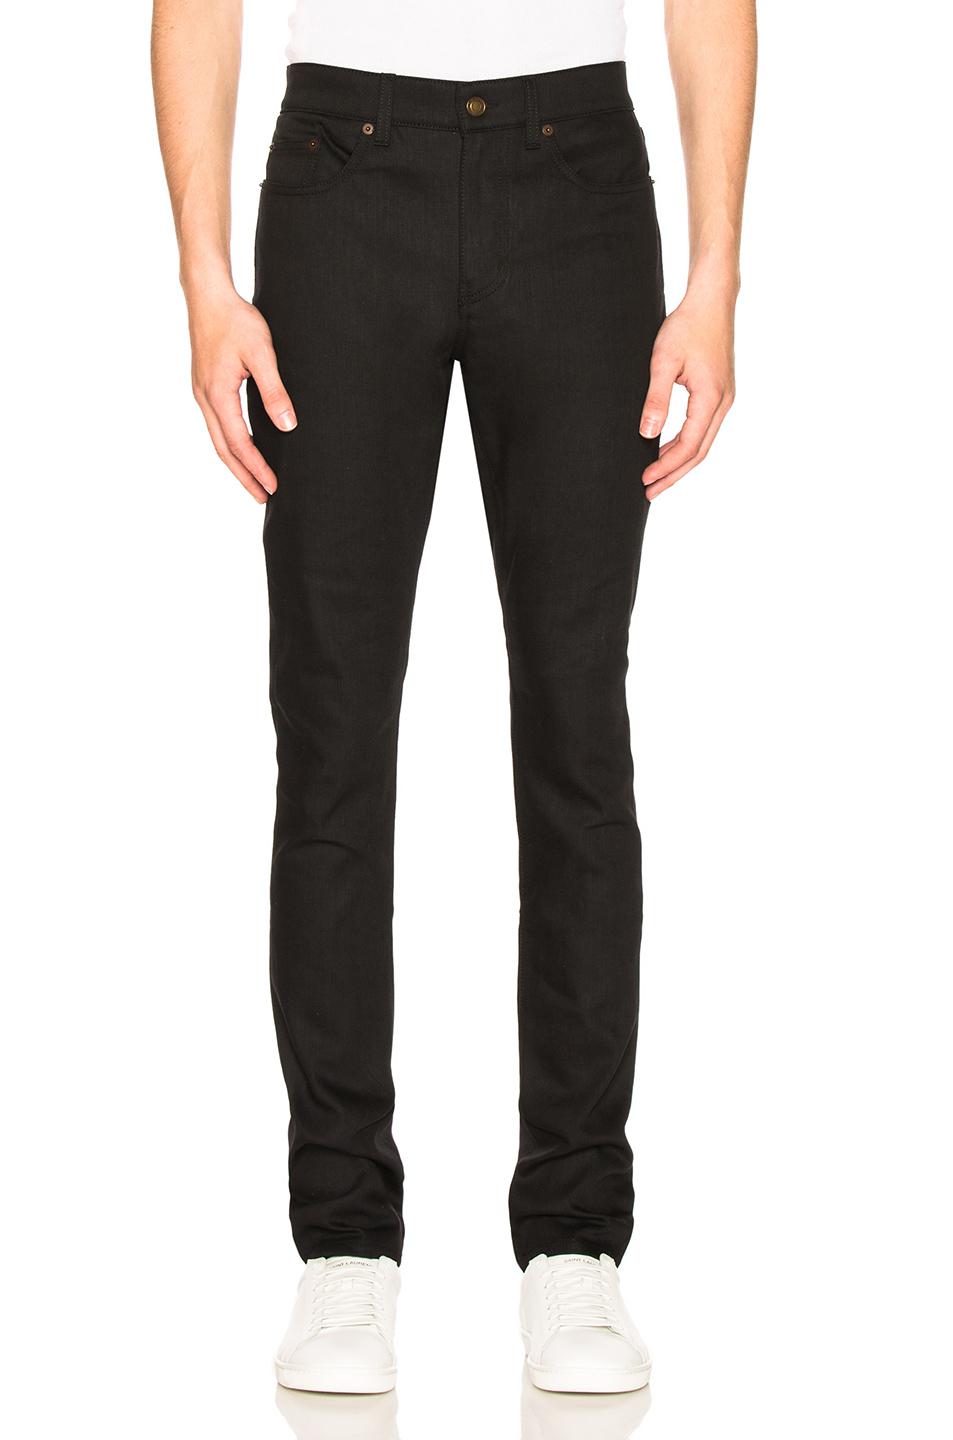 Saint Laurent Denim 5 Pocket Skinny Jeans in Black for Men - Lyst